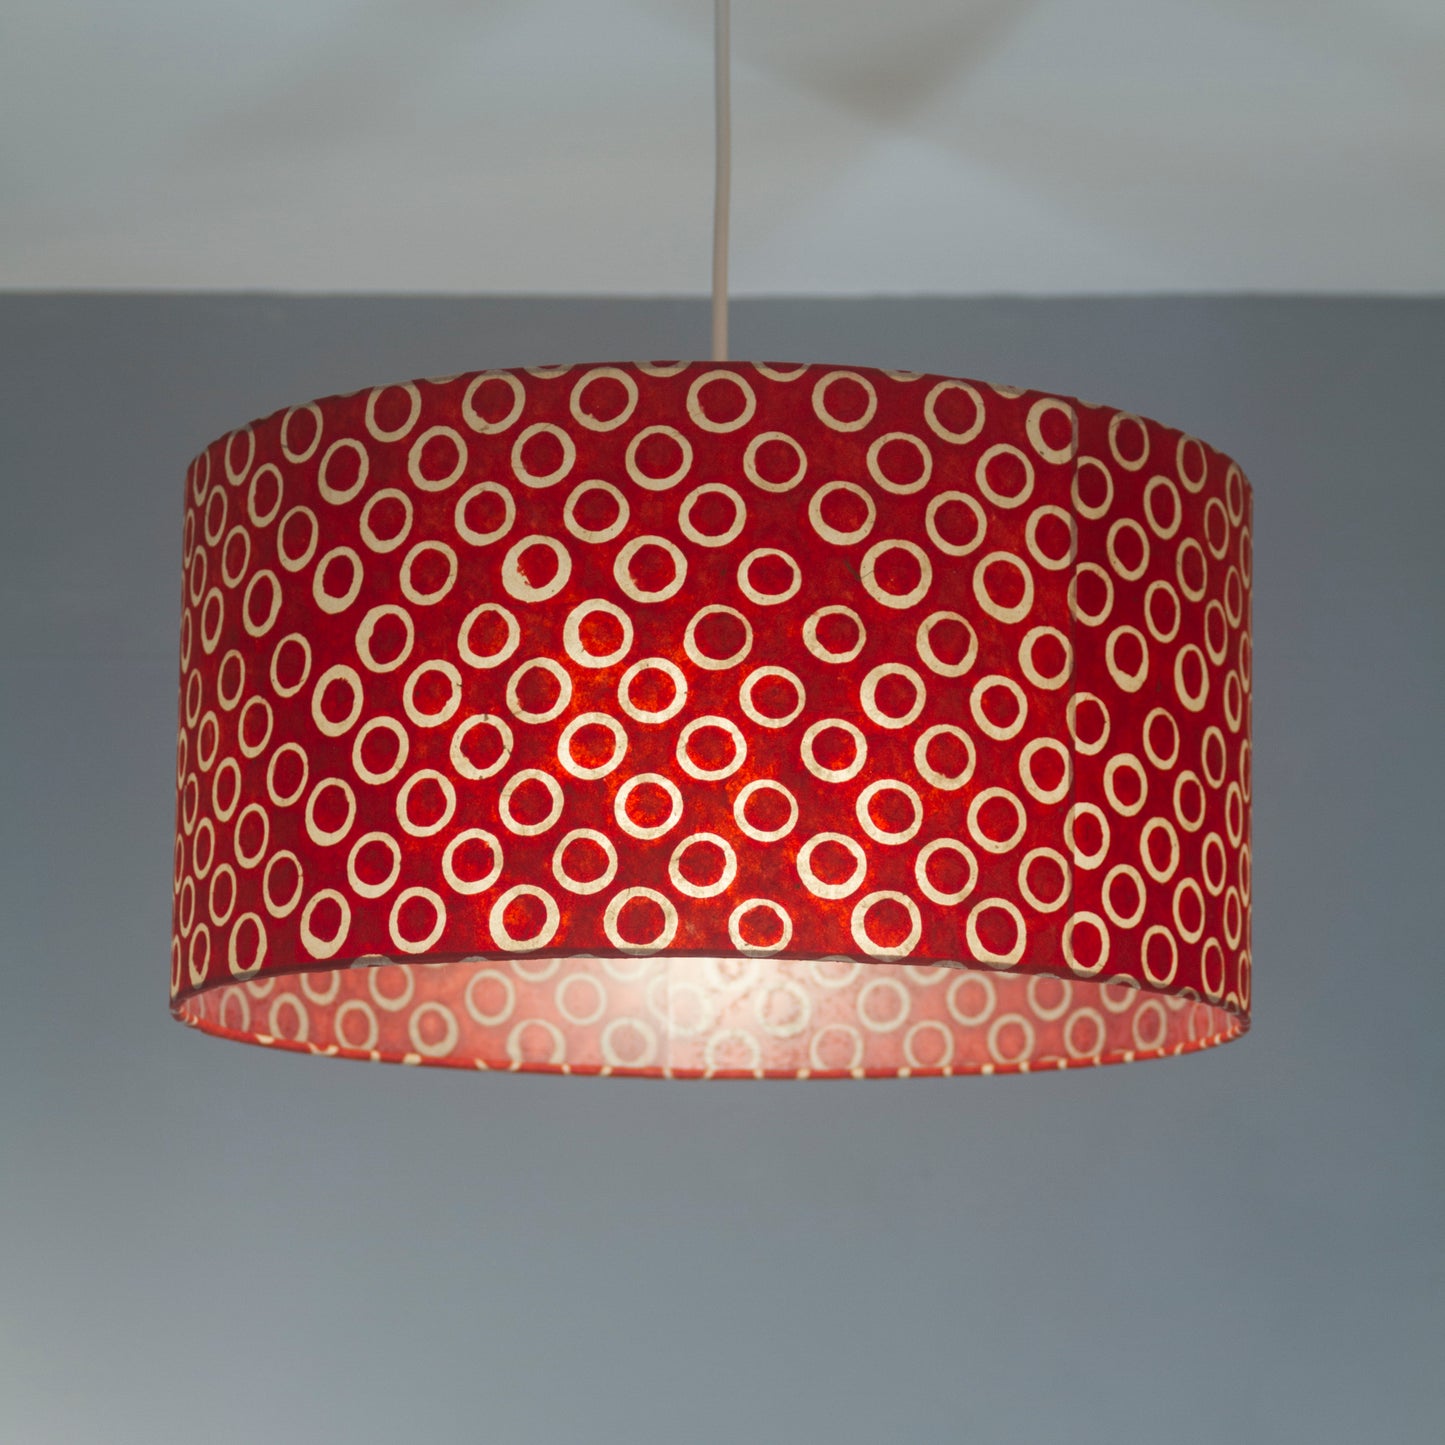 2 Tier Lamp Shade - P83 - Batik Red Circles, 30cm x 20cm & 20cm x 15cm